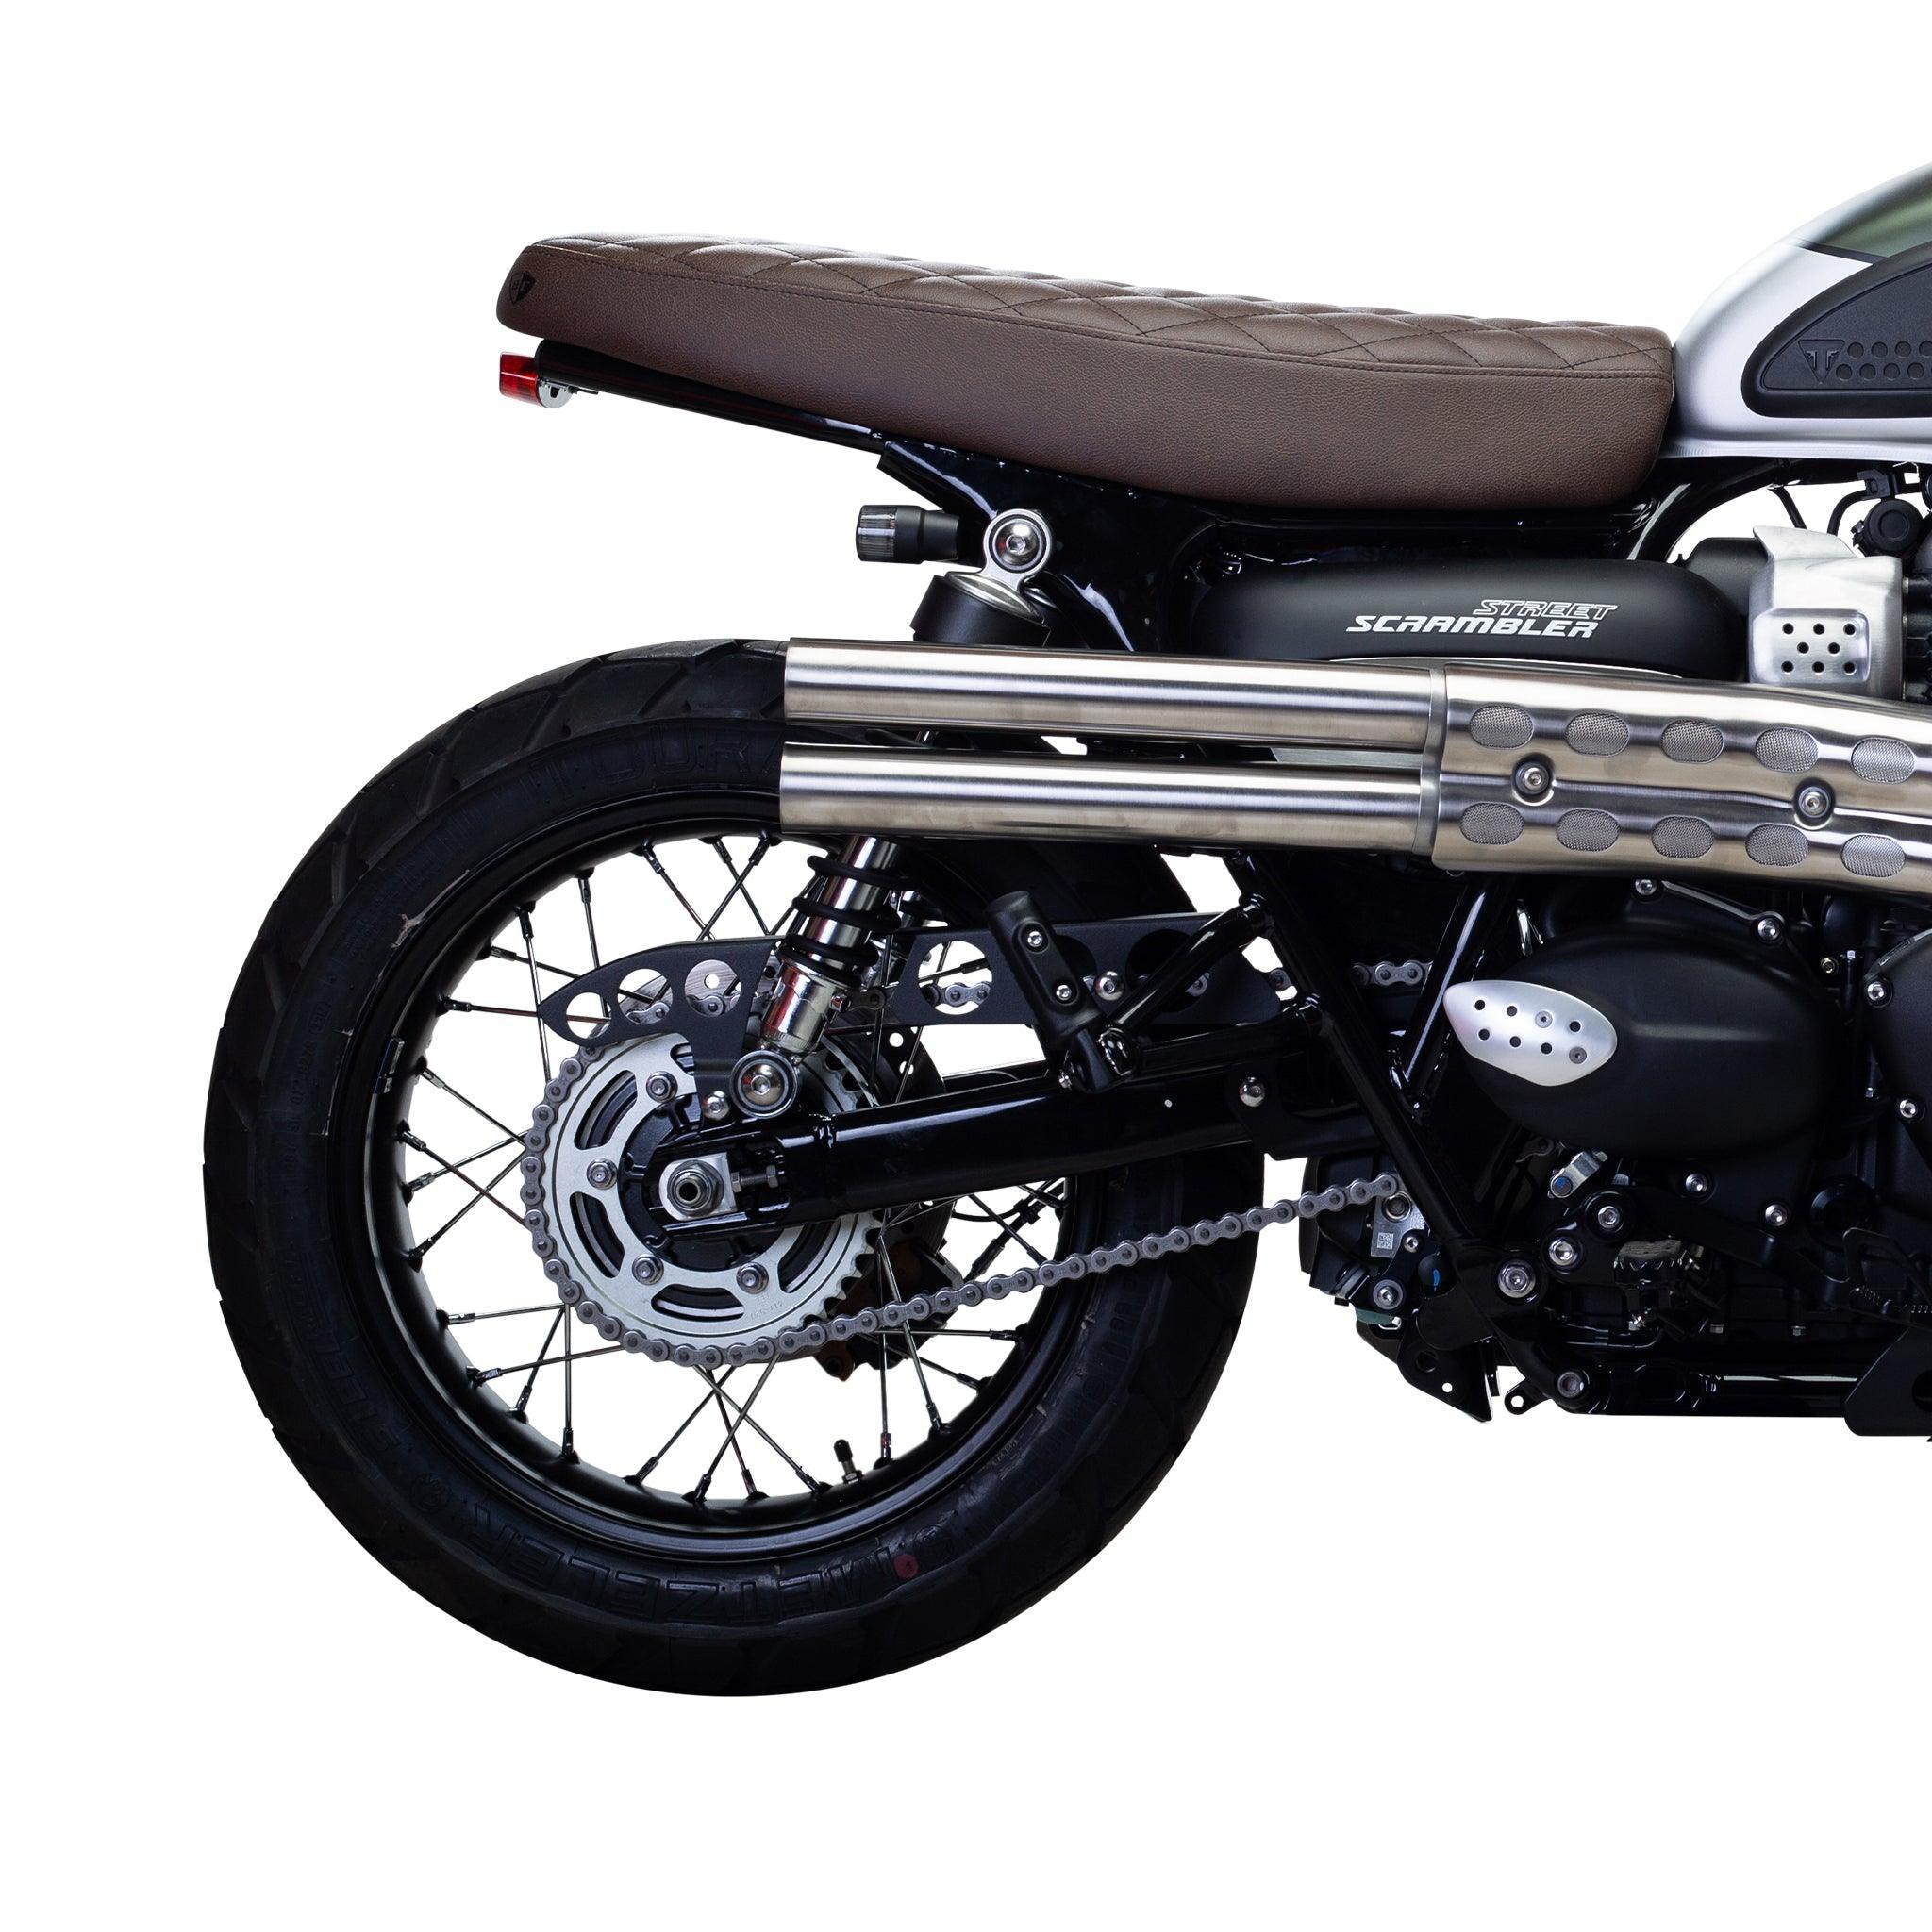 Slammer Tuck N Roll Gel Seat for Triumph Motorcycles - British Customs